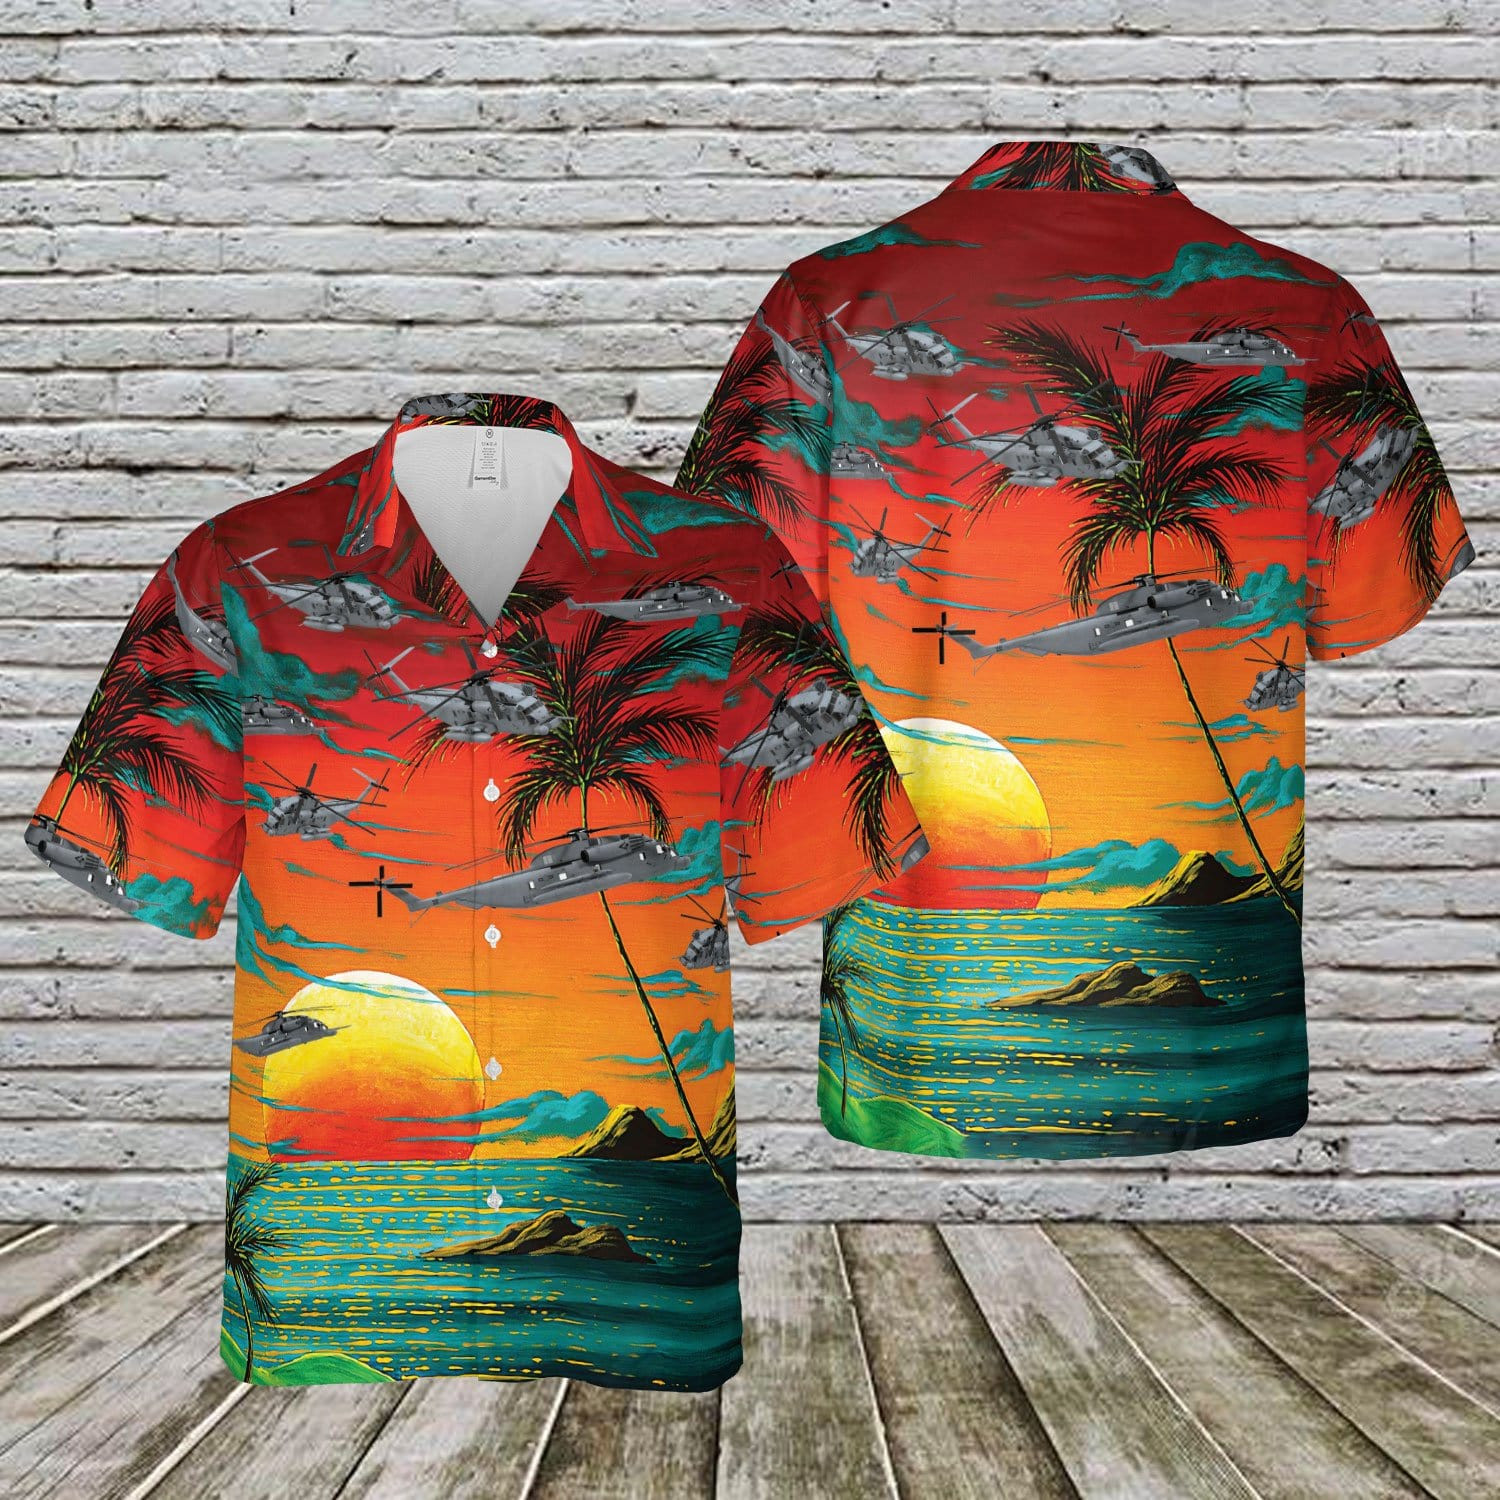 Sikorsky Mh-53 Pave Low Unisex Hawaiian Shirts - Beach Shorts 290621H